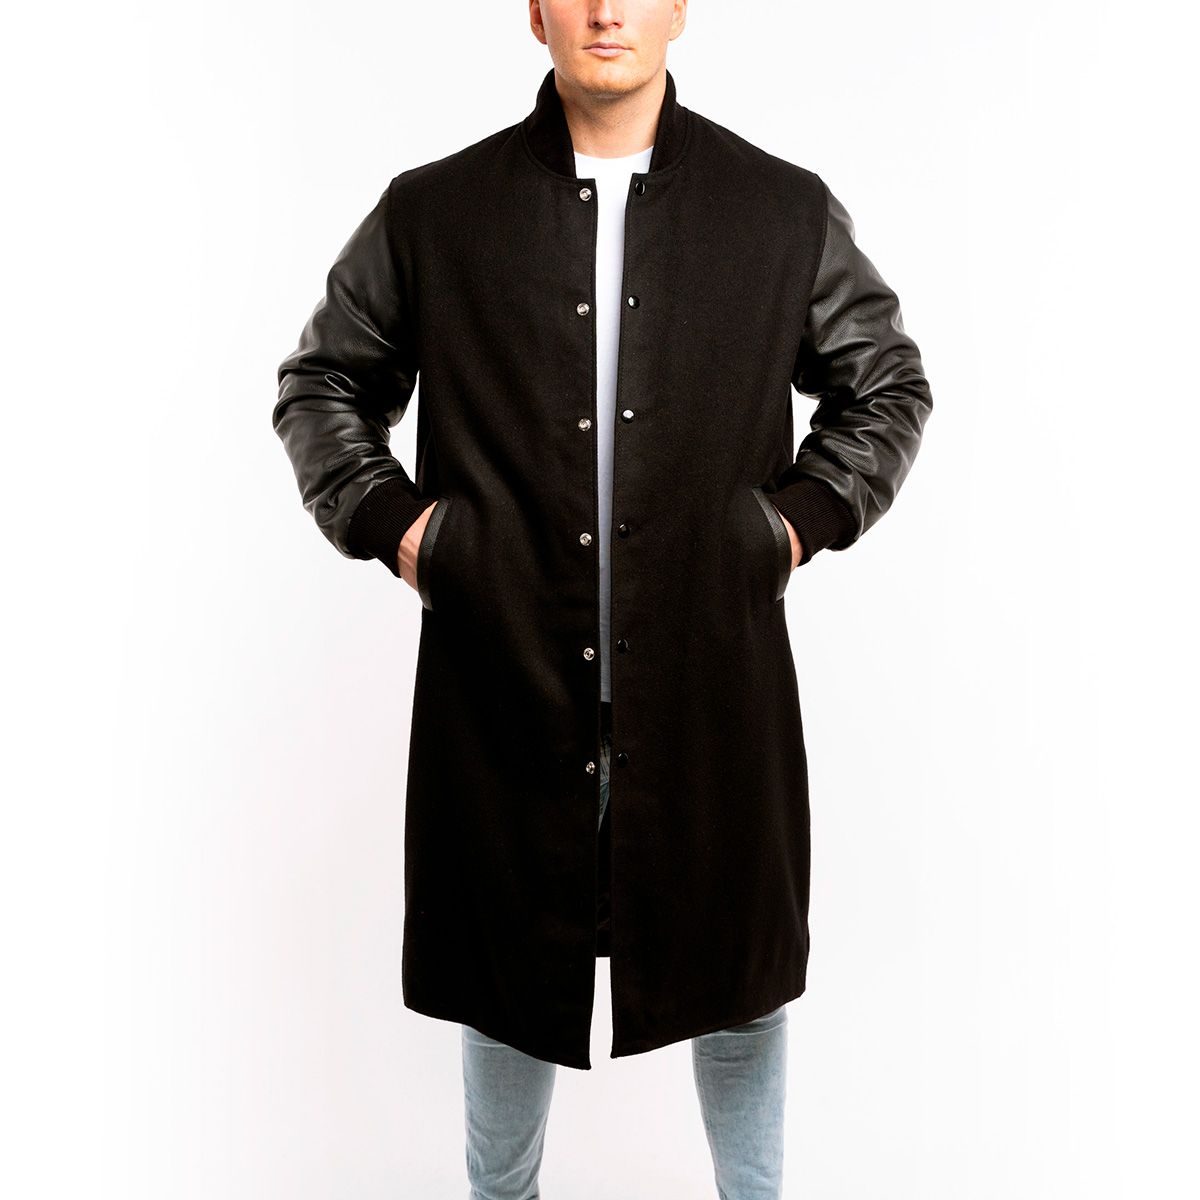 Varsity Base Man Coat Black Wool Body Black Leather Sleeves Letterman Coat